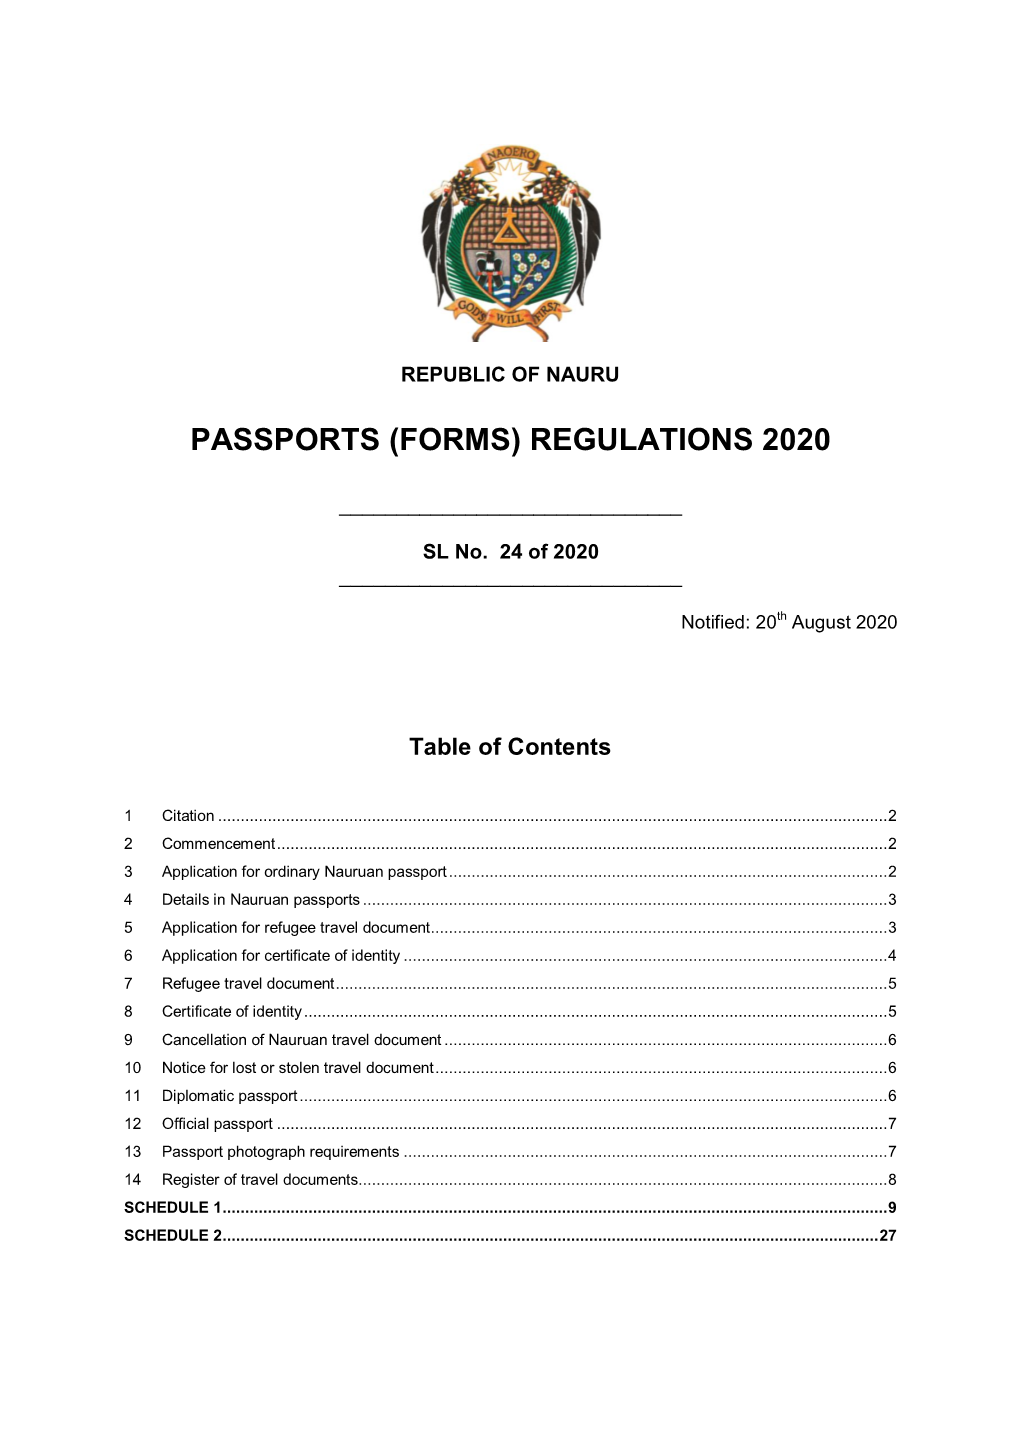 Passports (Forms) Regulations 2020